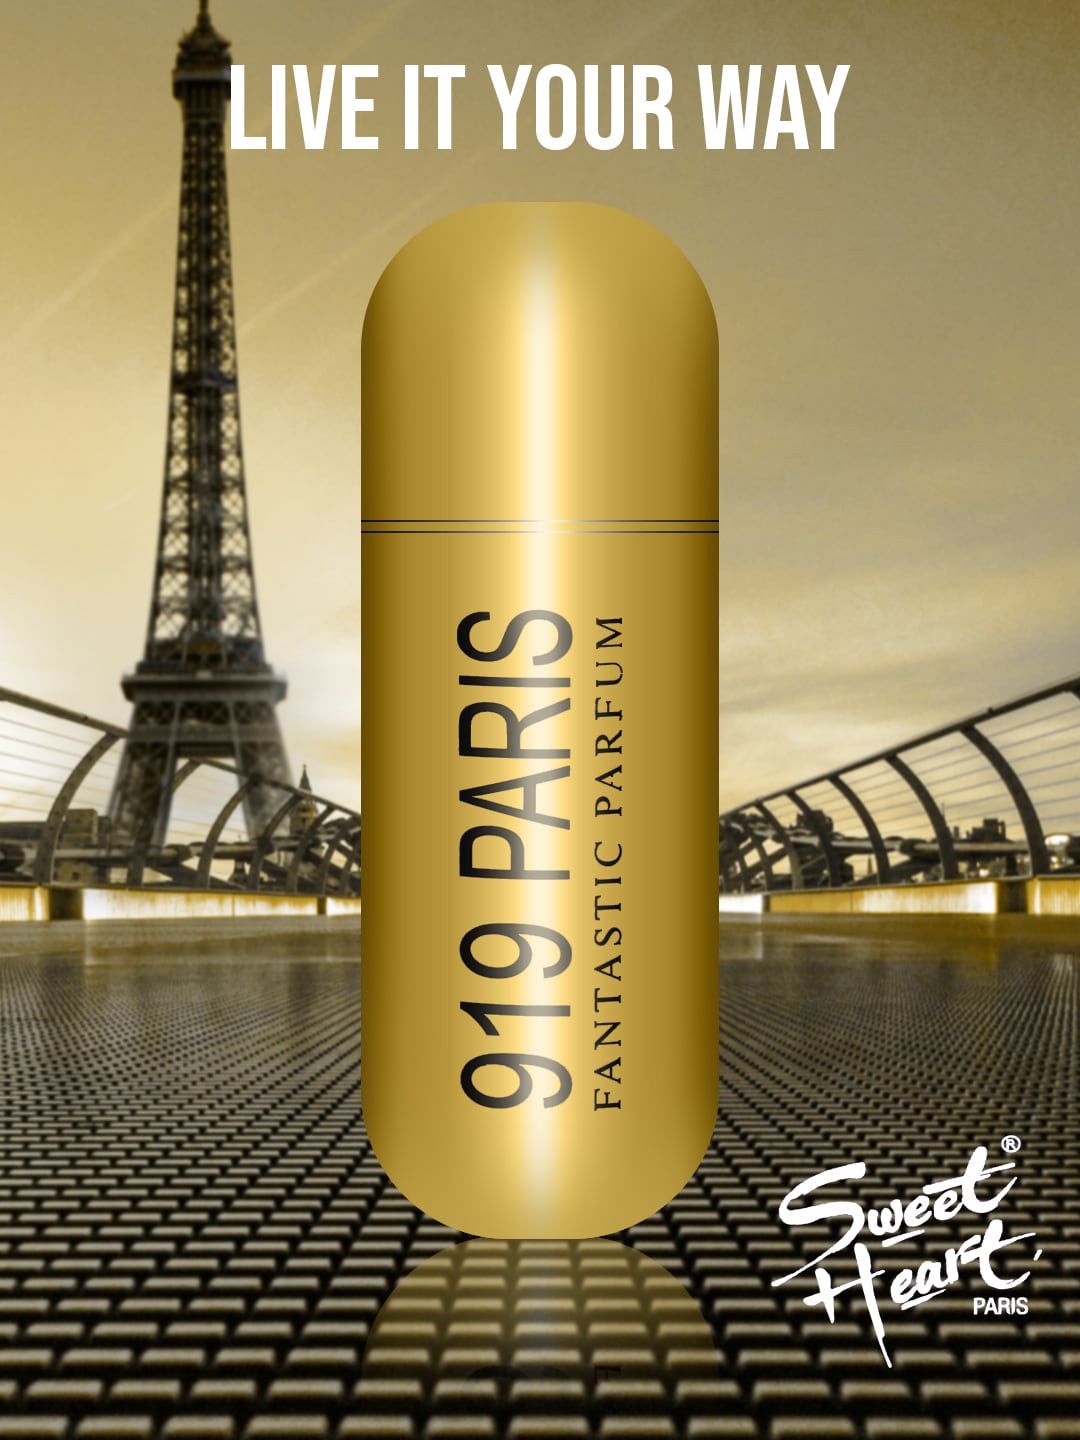 Sweetheart 919 Paris Fantastic Parfum - 100ml Price in India